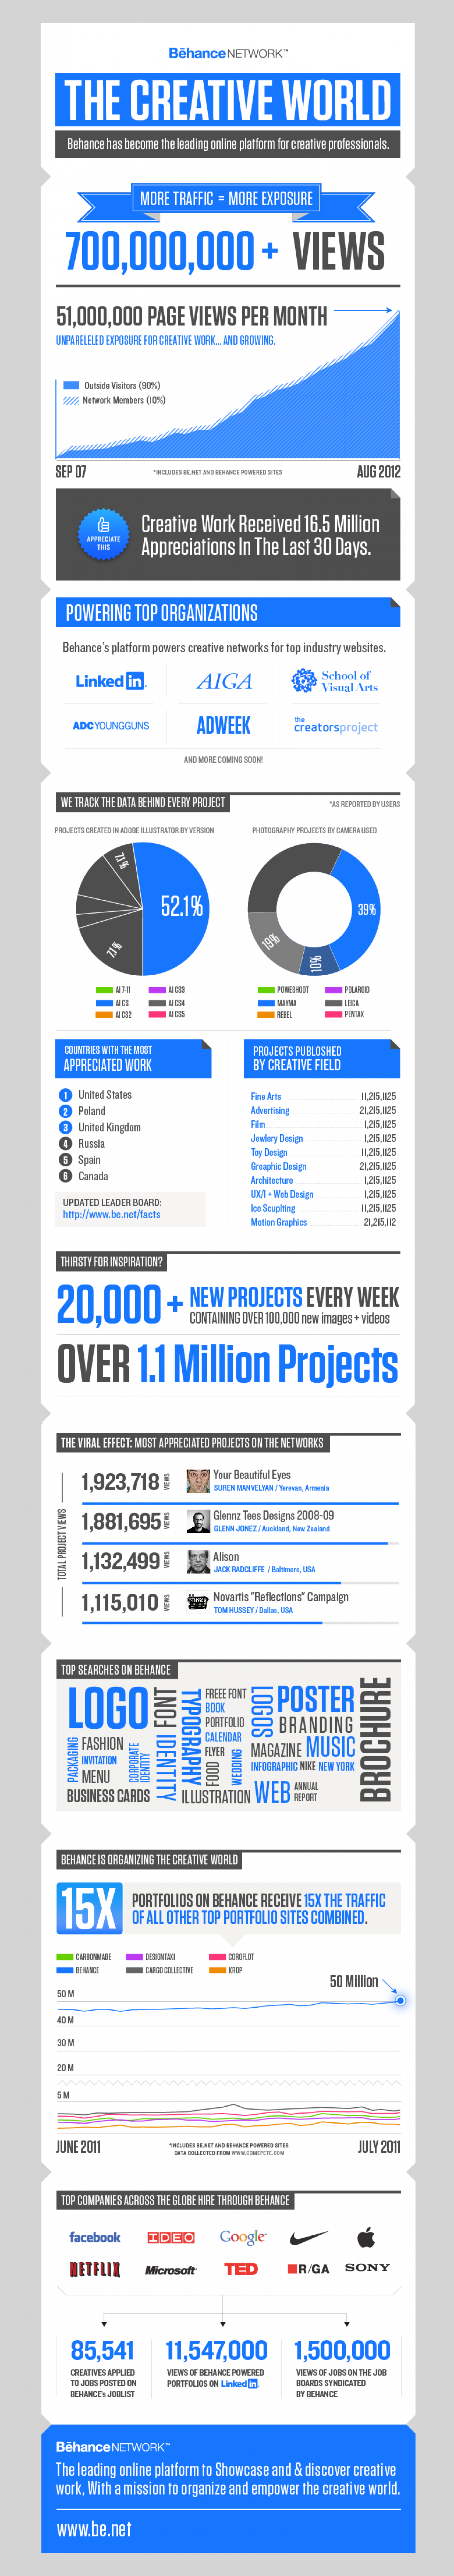 Behance Network 2011 Infographic